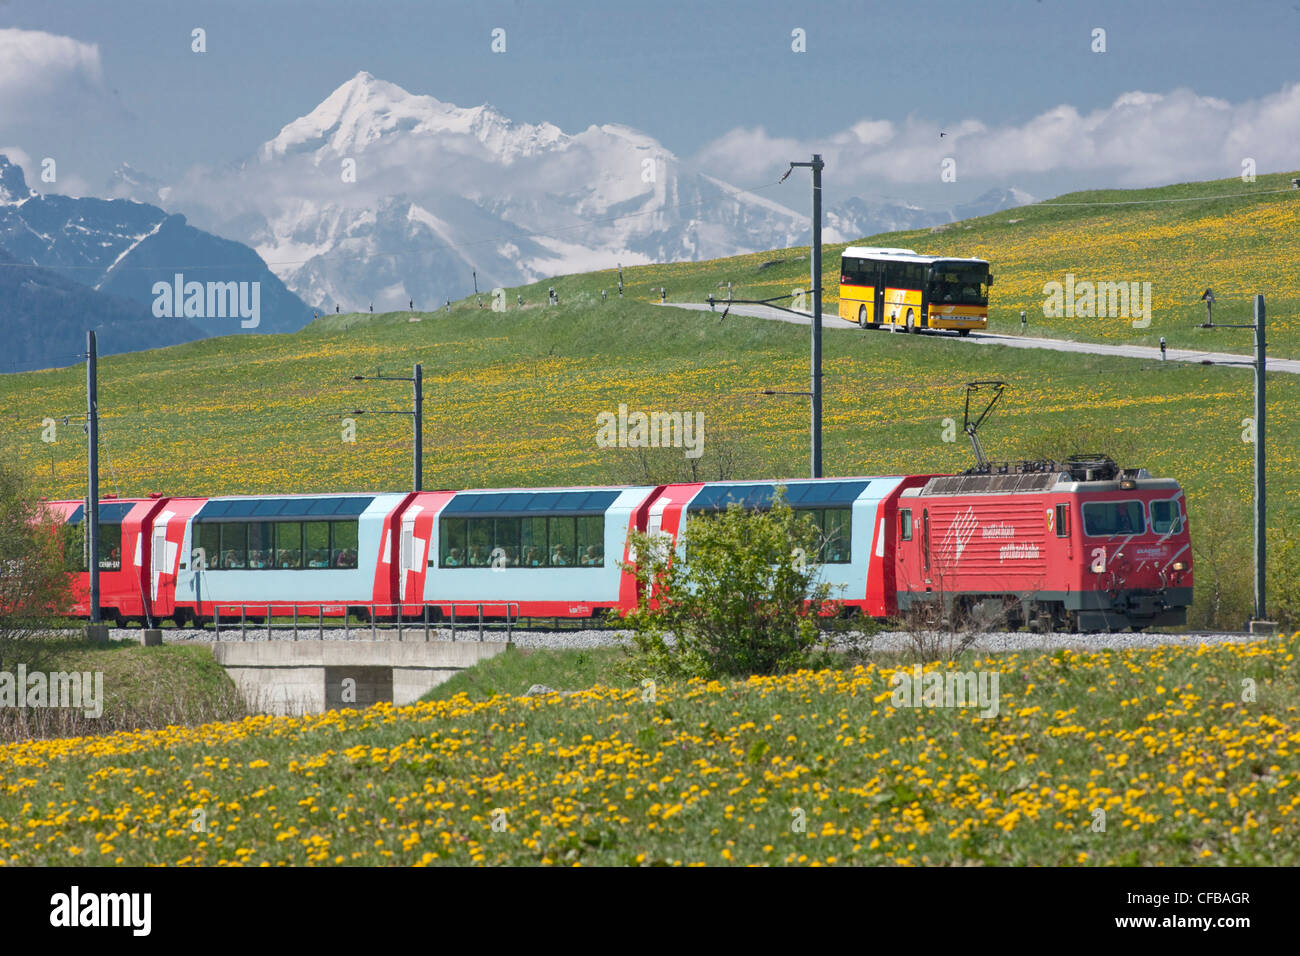 Straße, Bahn, Zug, Eisenbahn, Berg, Berge, Post van, Postauto, Wallis,  Wallis, Schweiz, Europa, Glacier express, p Stockfotografie - Alamy